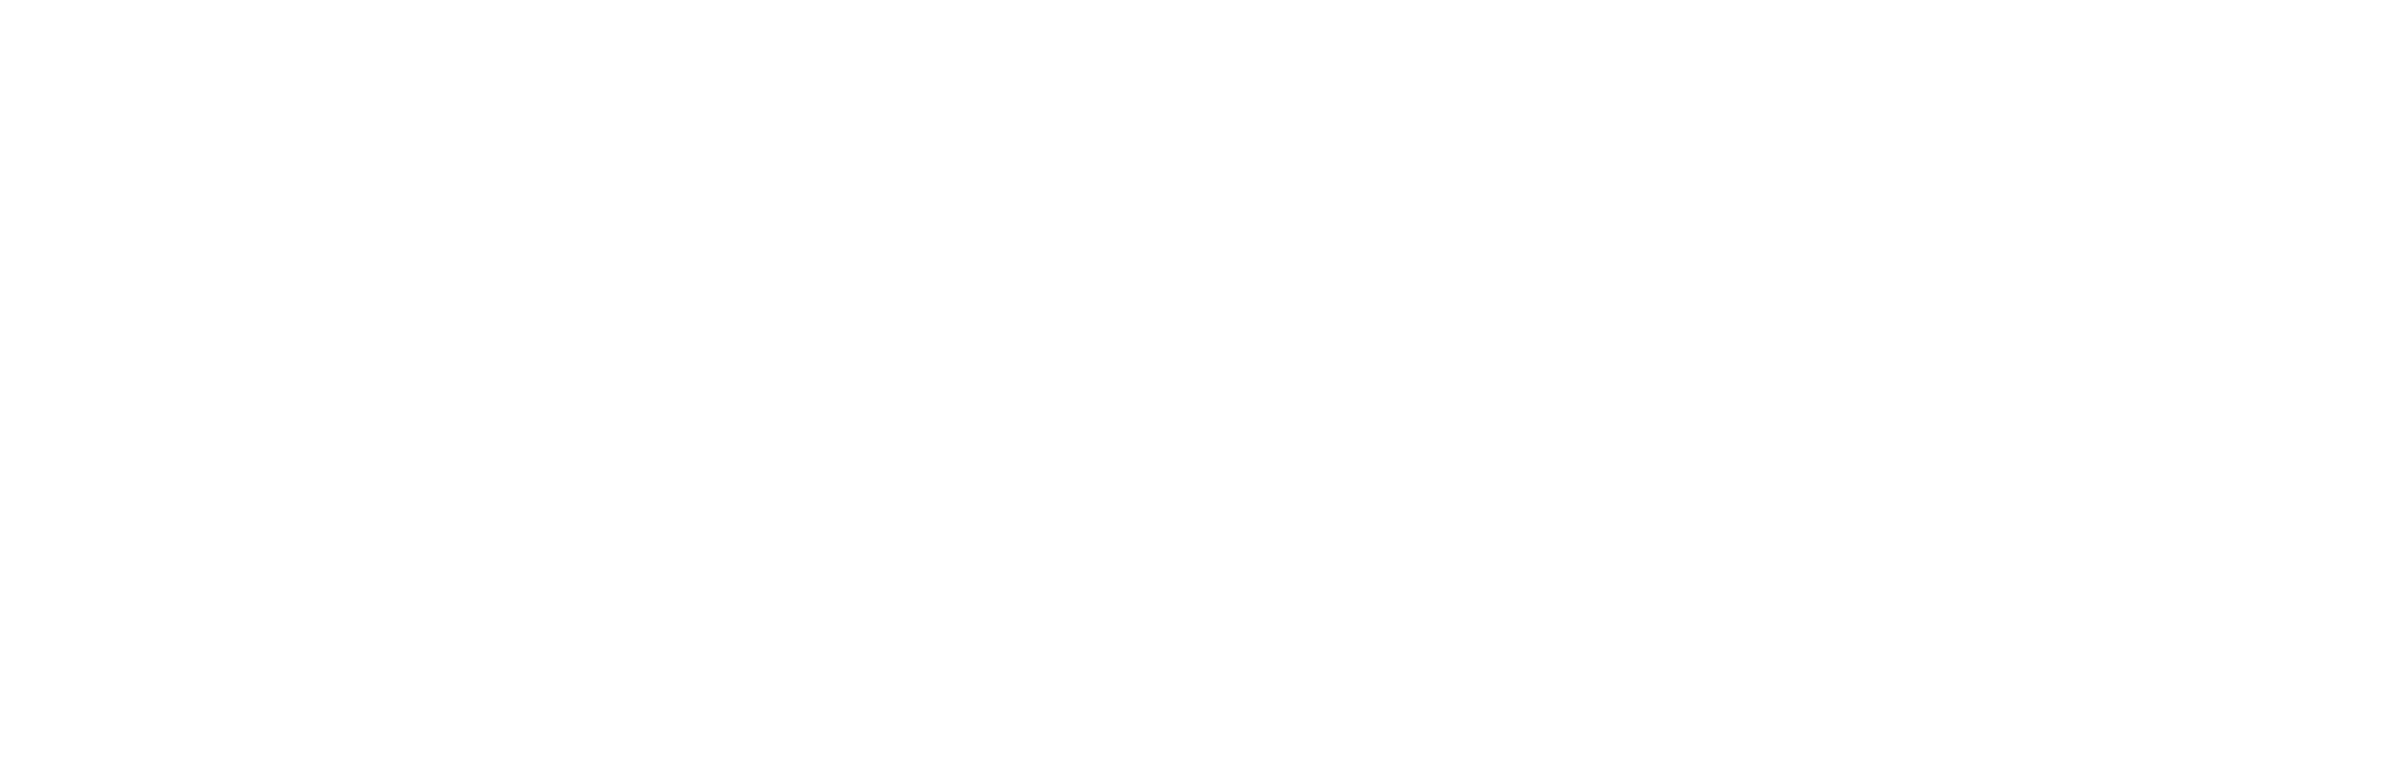 date-logo